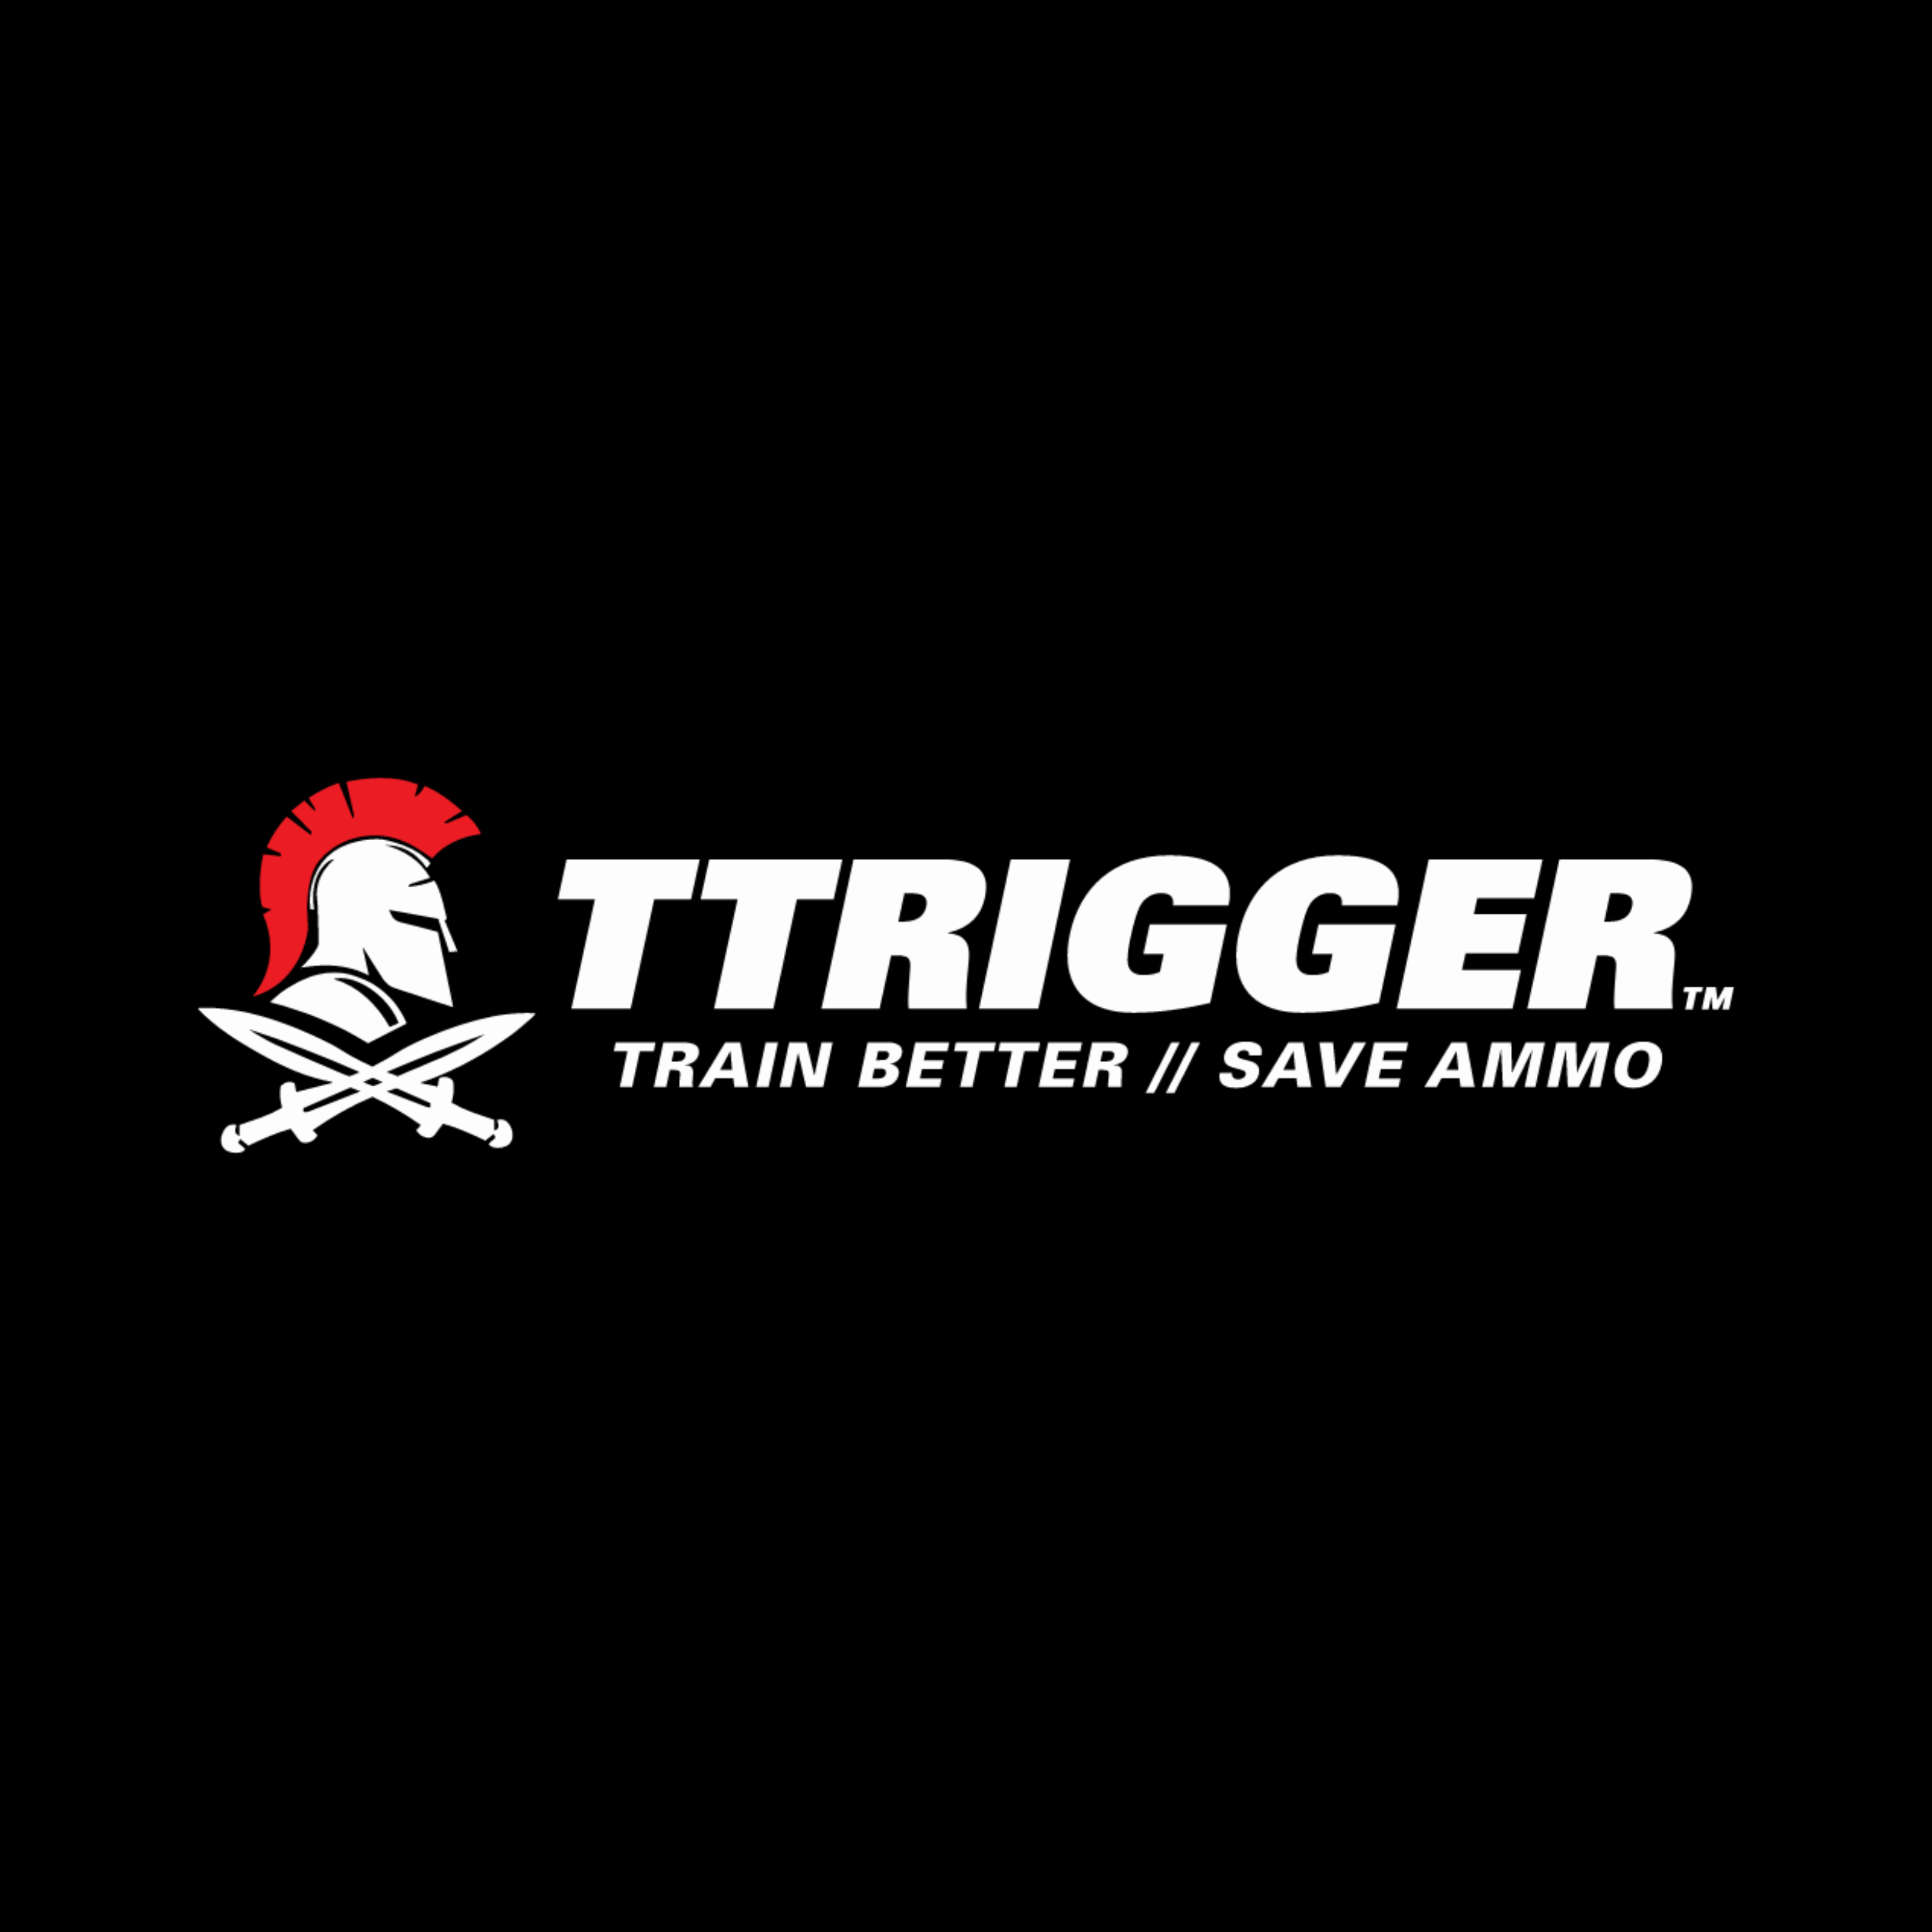 ttriggermagazine